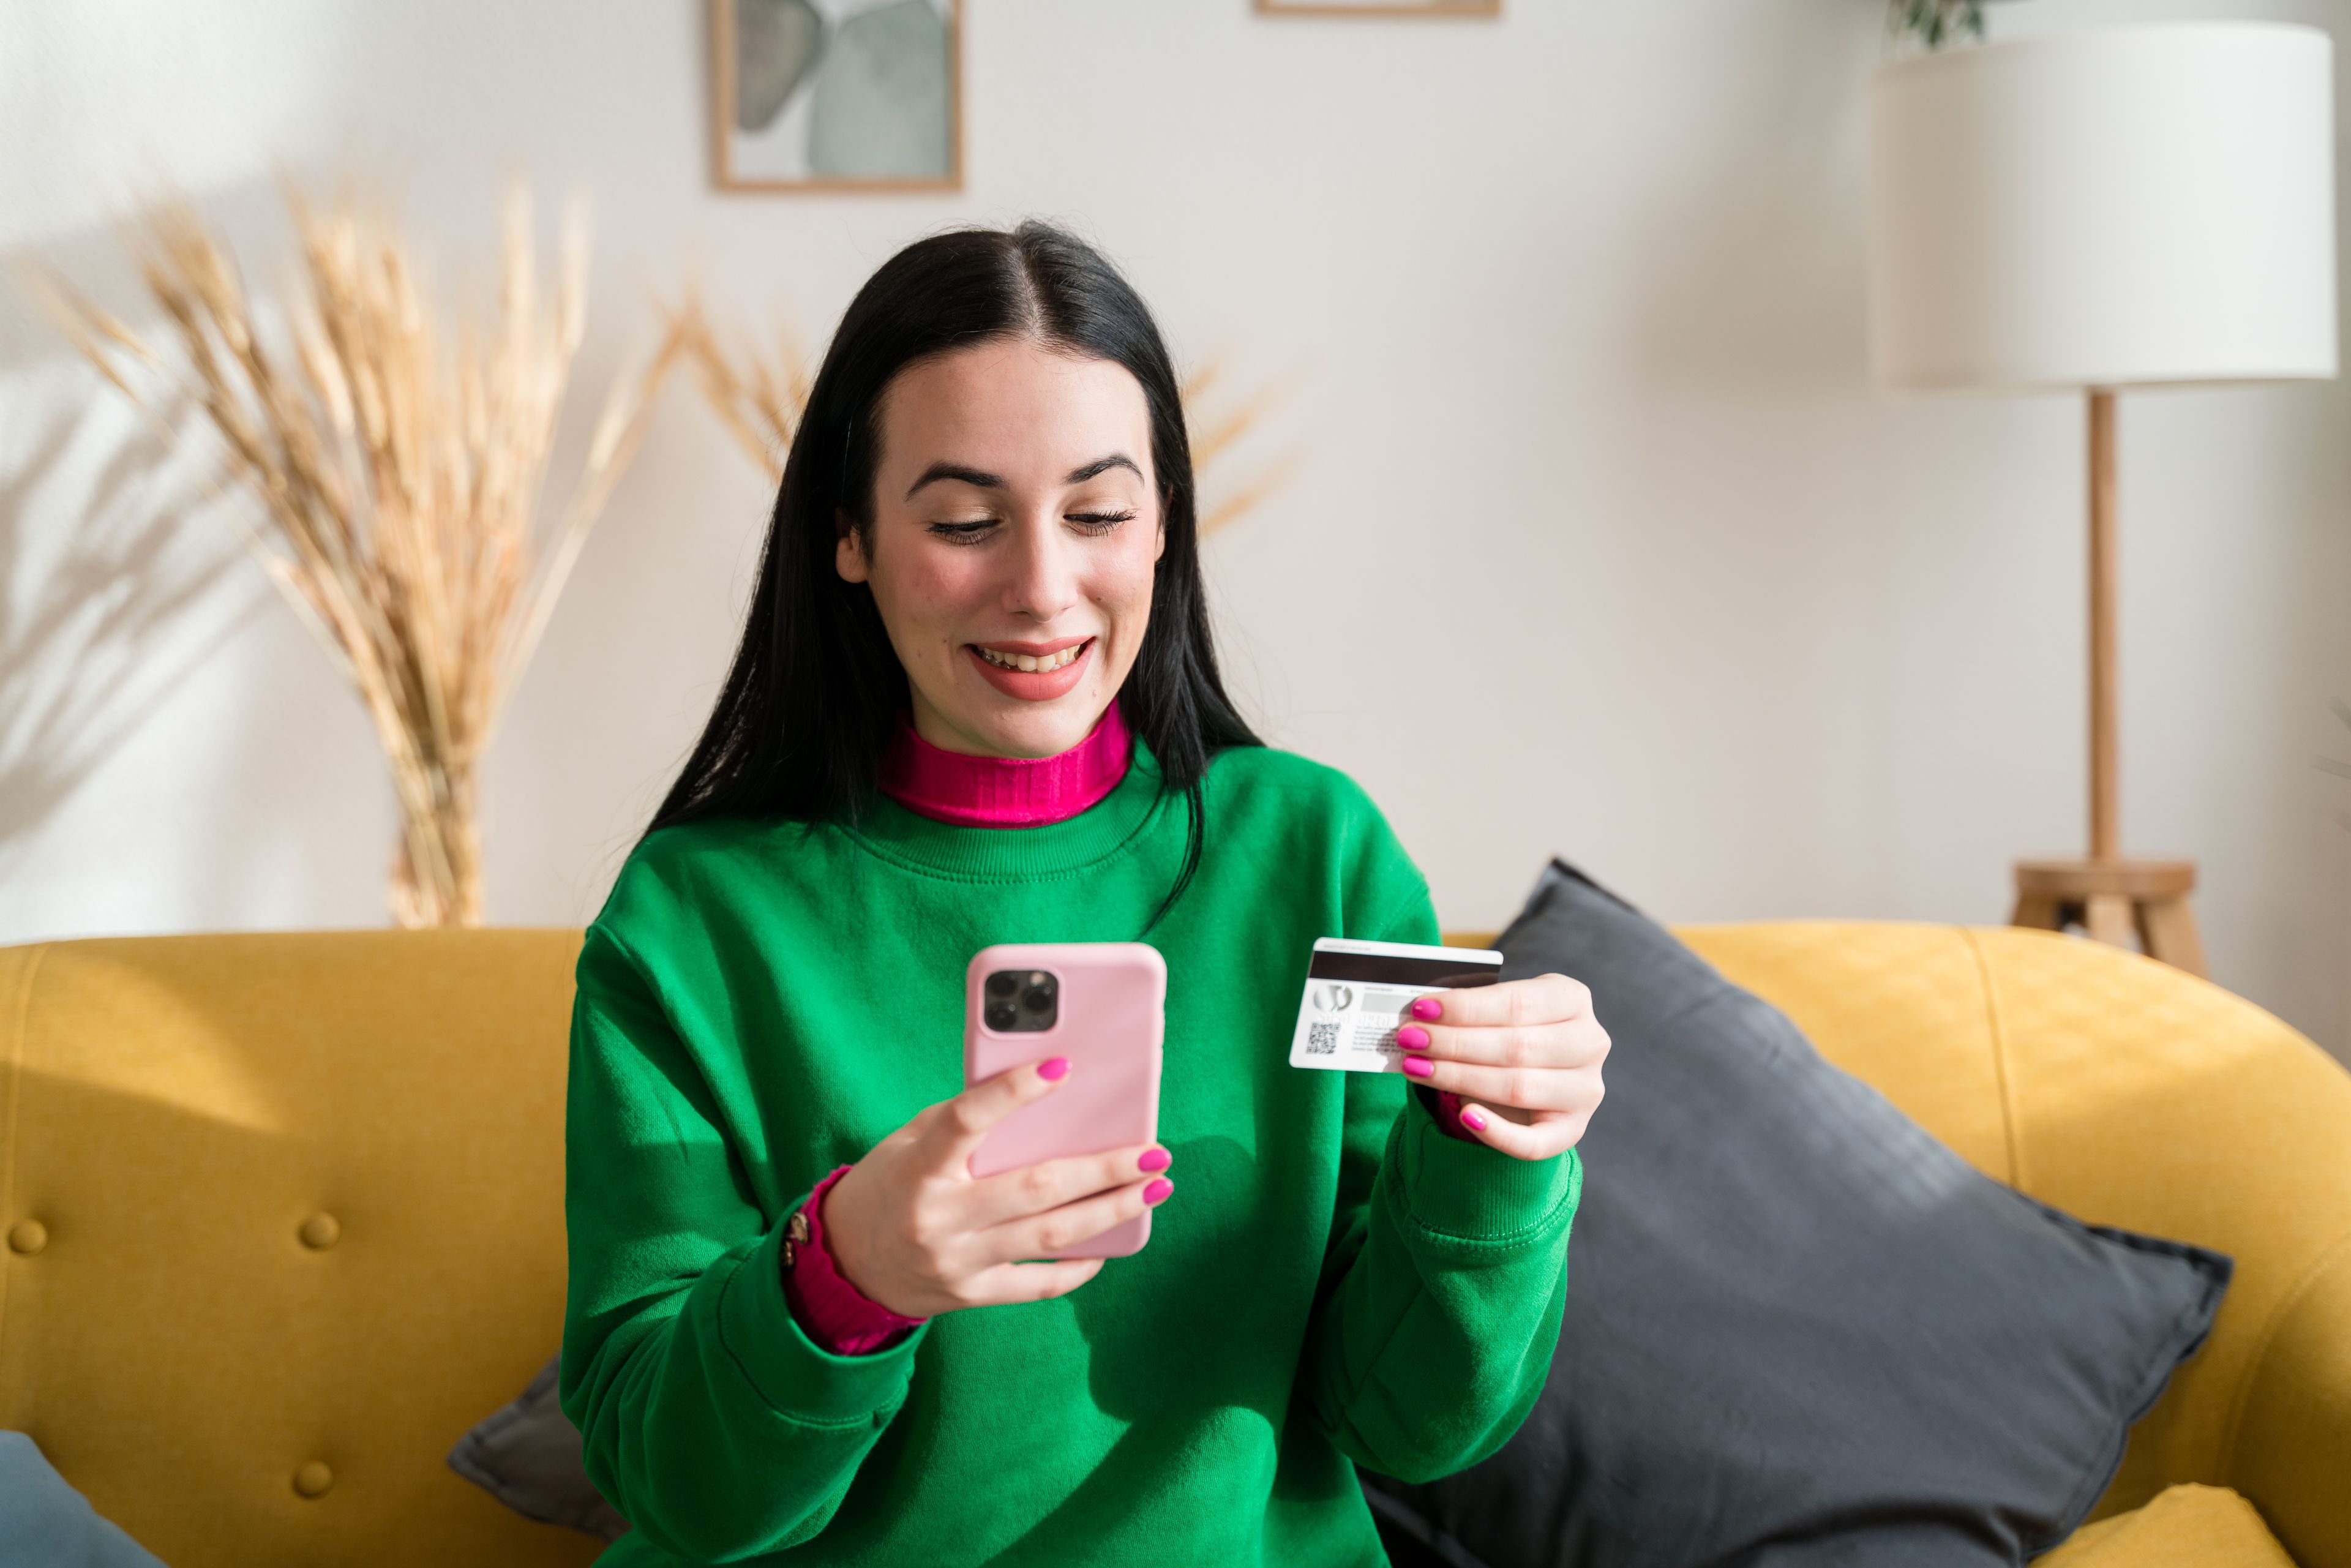 Mujer joven mira el móvil y la tarjeta bancaria